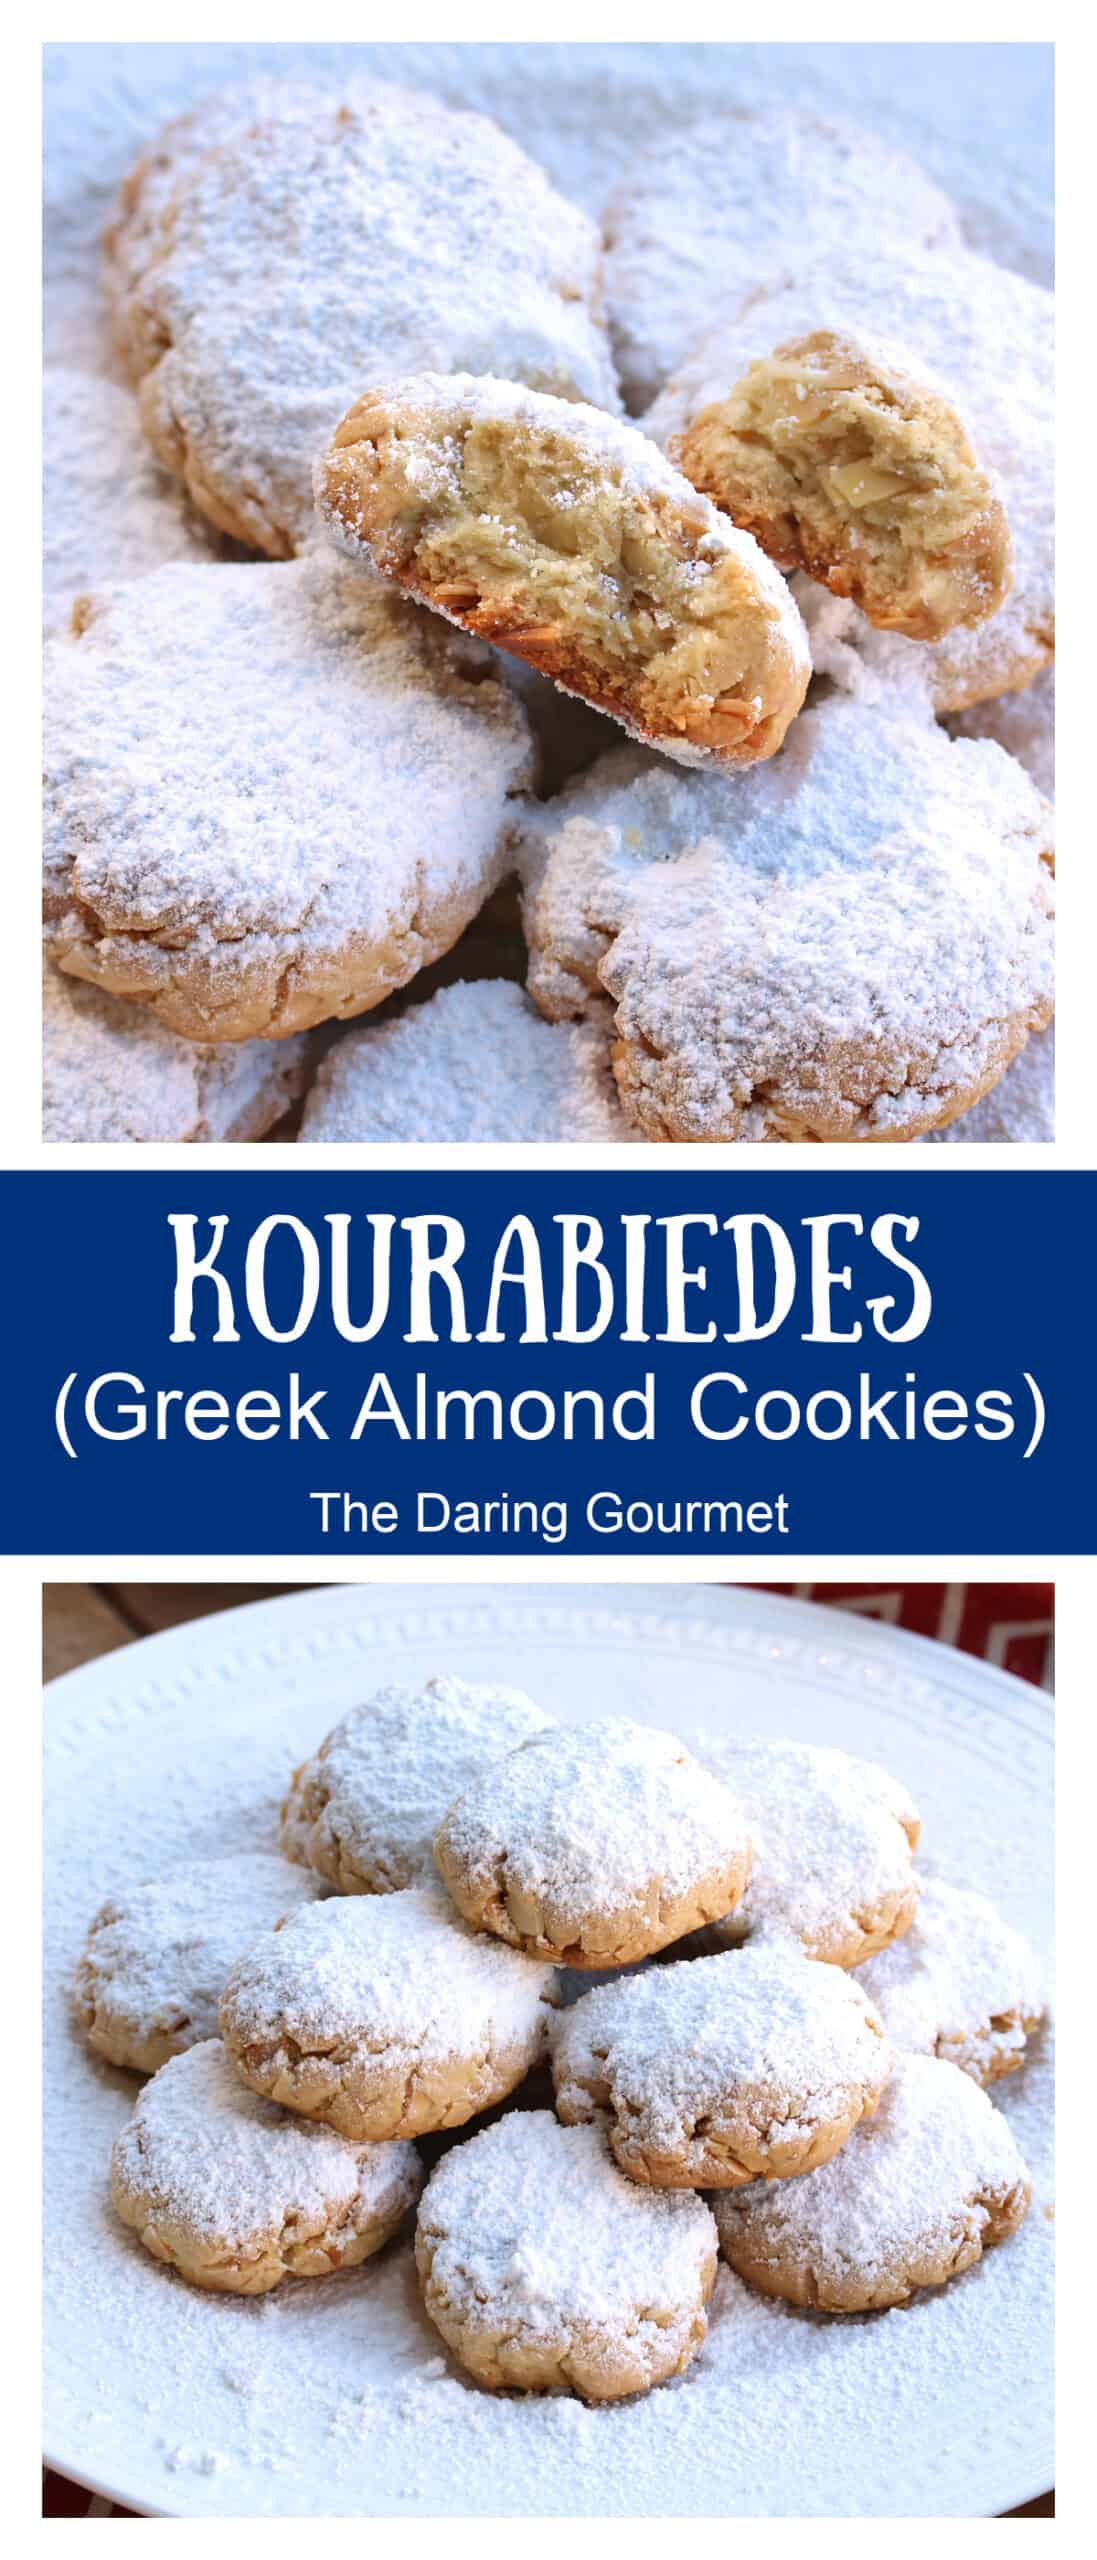 kourabiedes recipe greek almond cookies butter brandy whiskey cognac liquor rose water